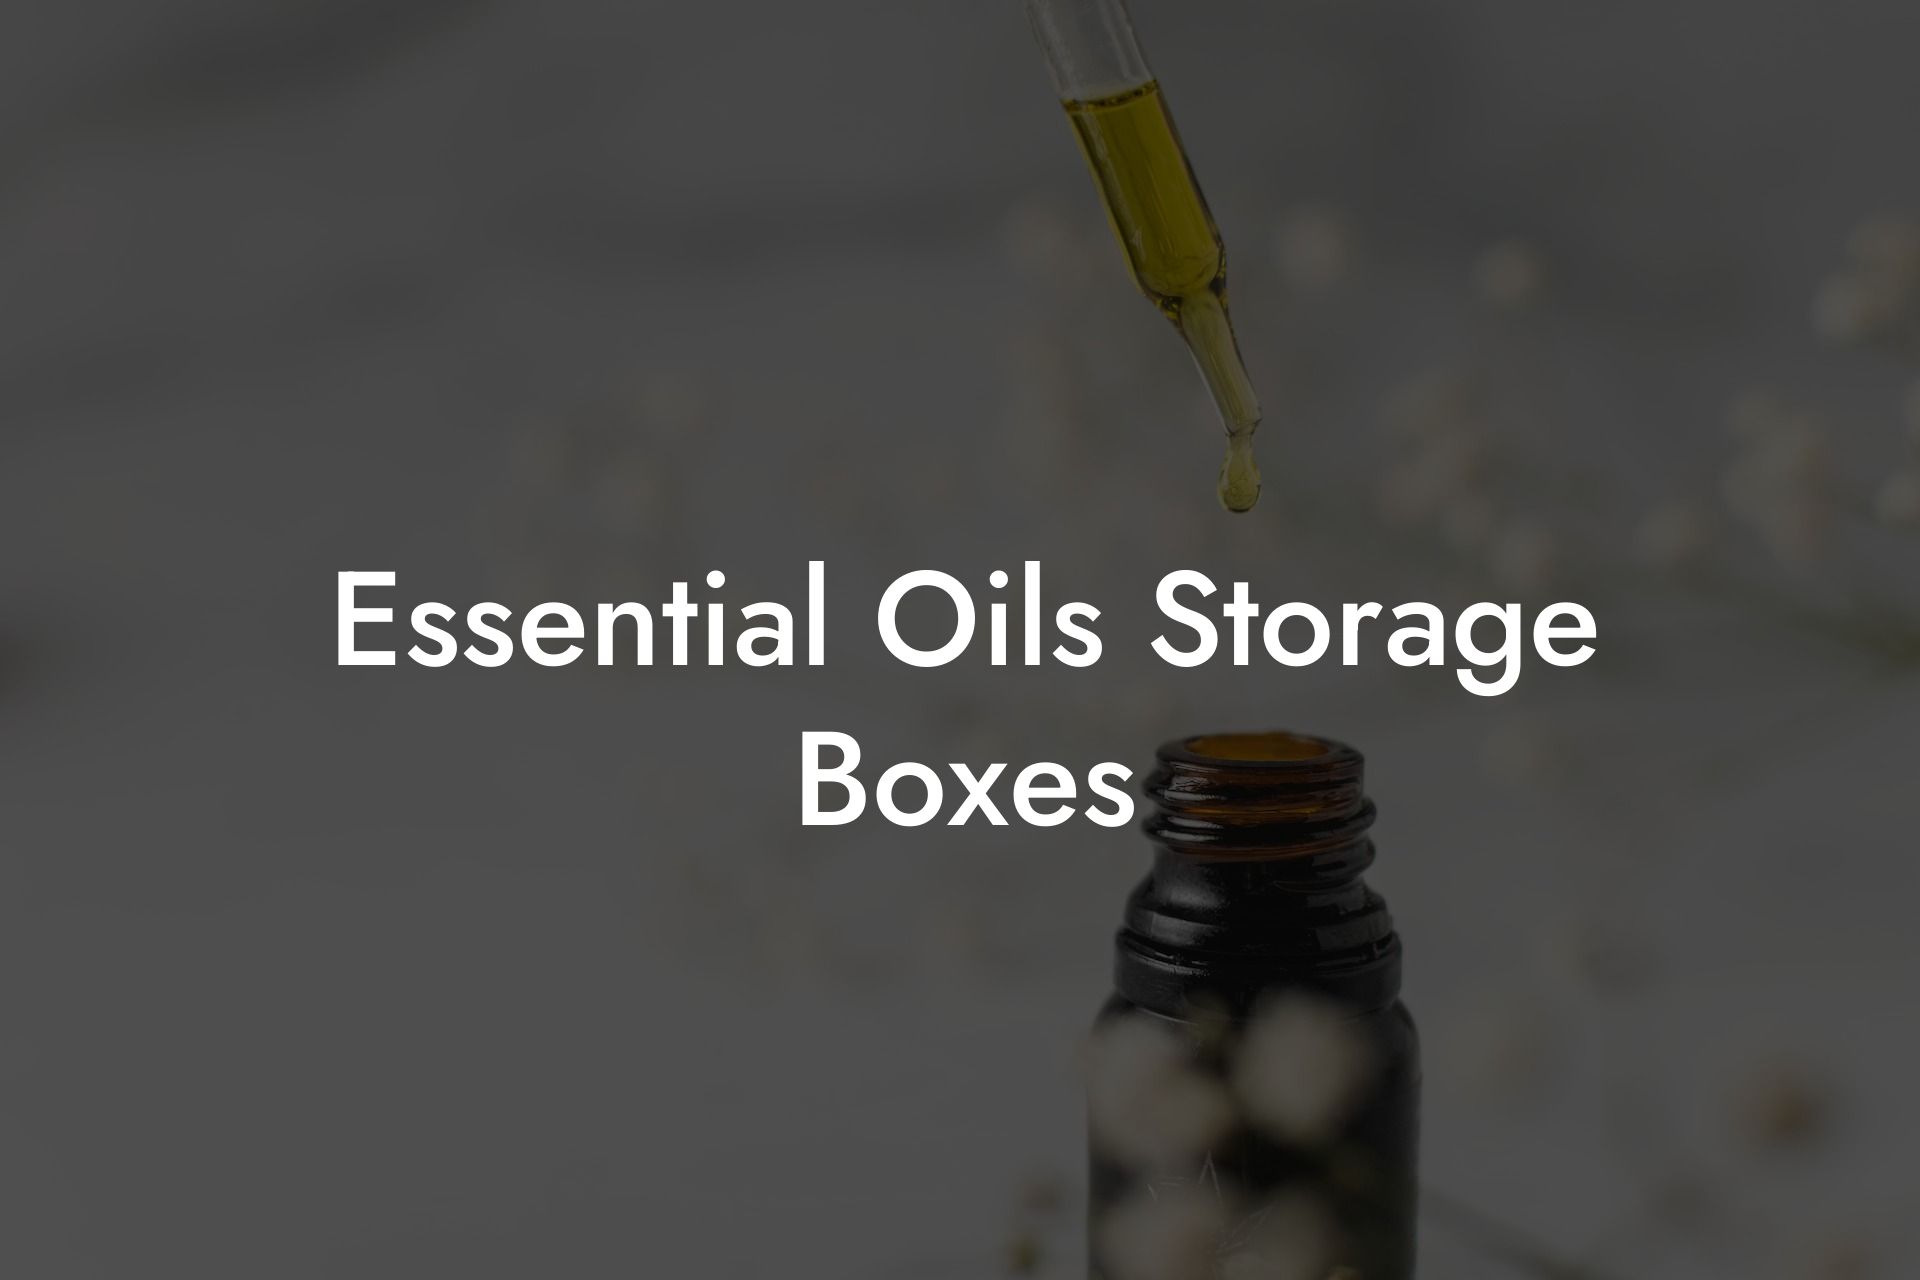 Essential Oils Storage Boxes